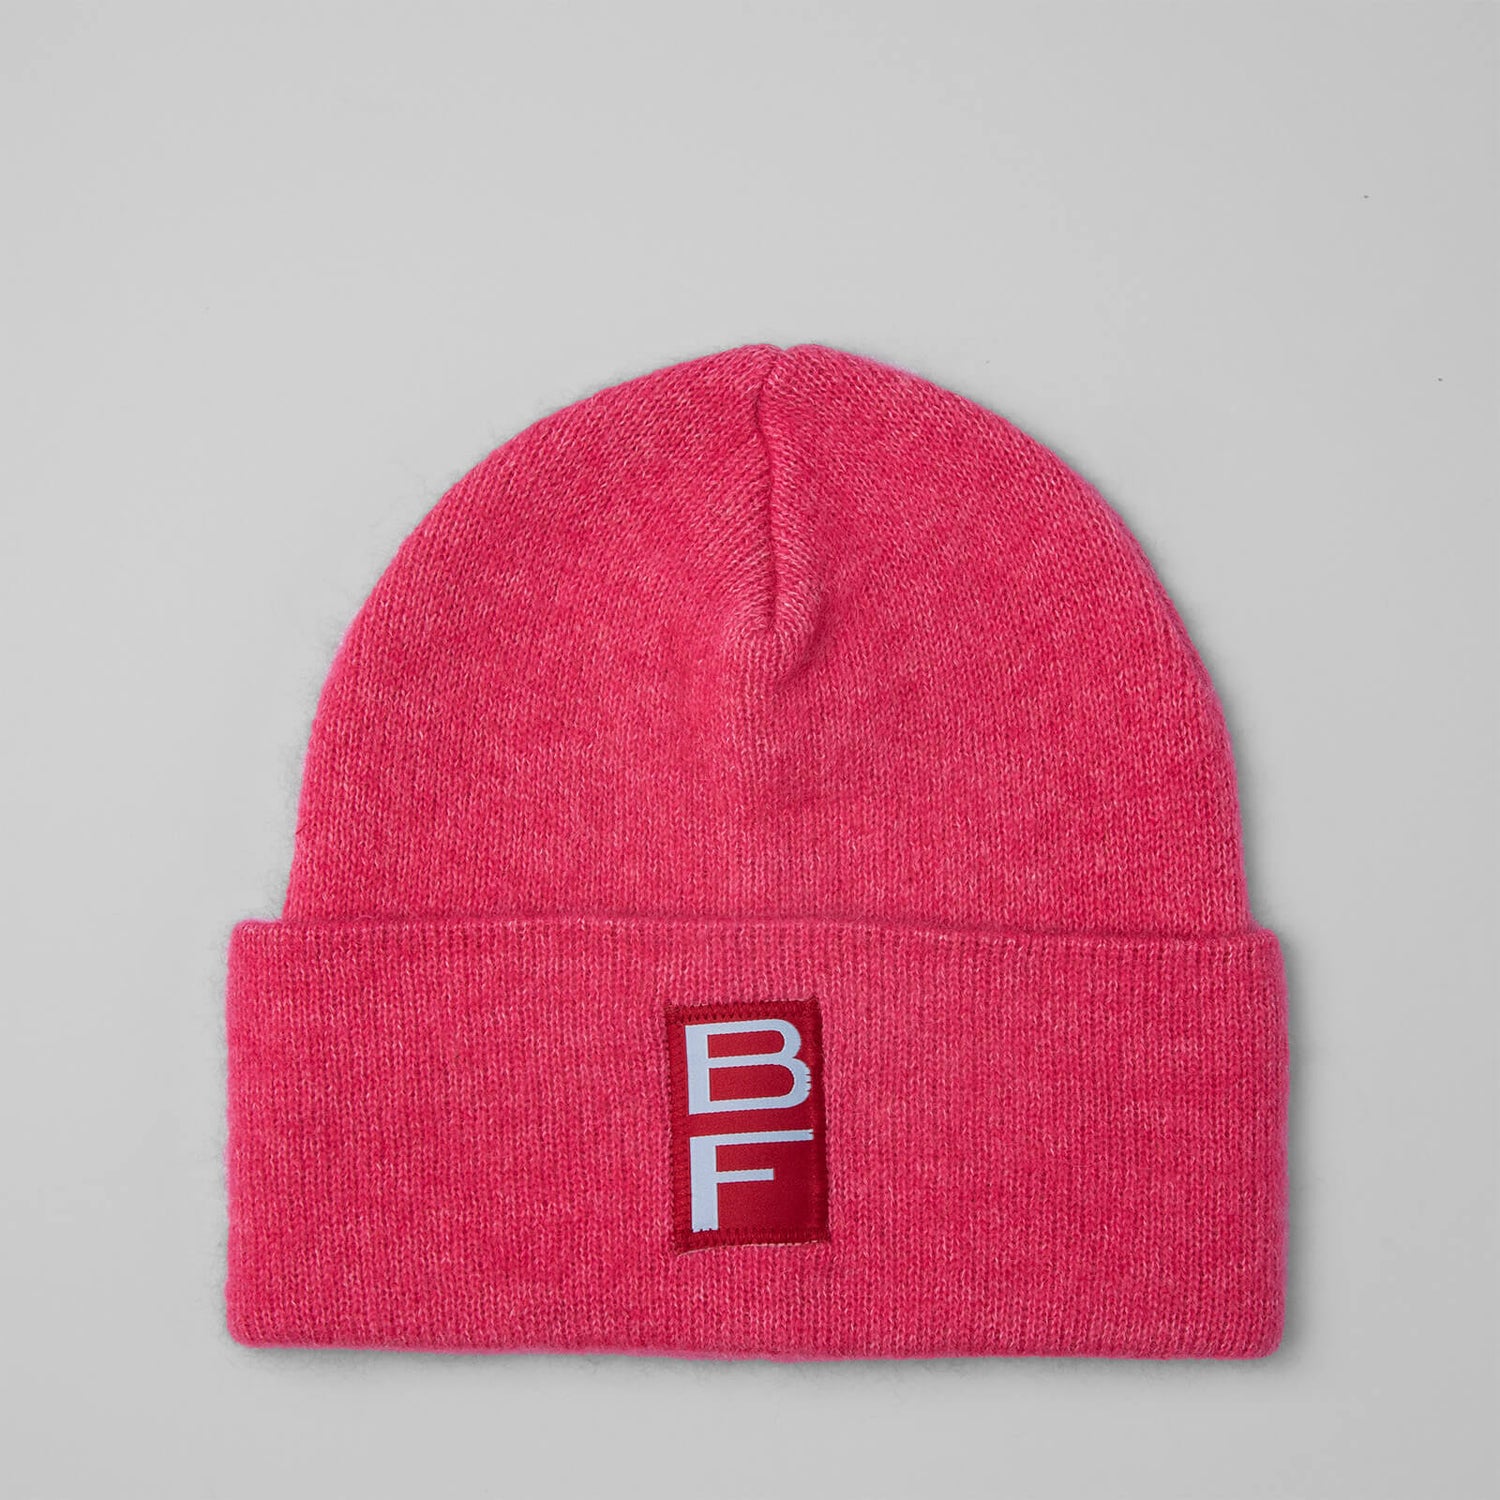 BY FAR Women's Solid Hat Alpaca - Hot Pink